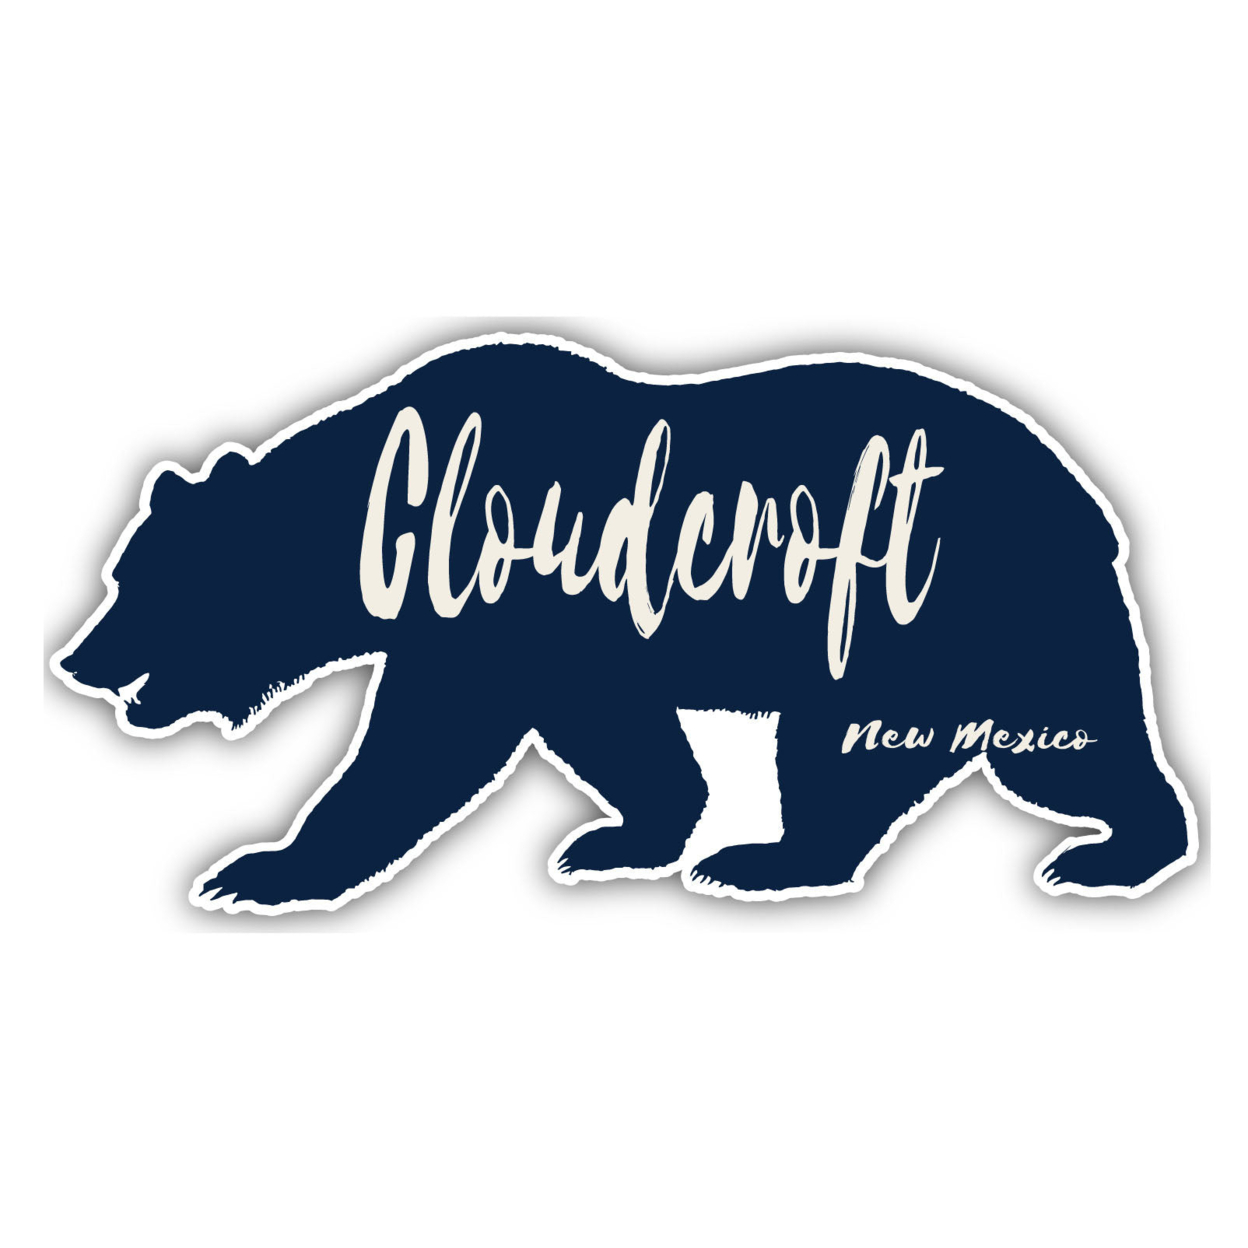 Cloudcroft New Mexico Souvenir Decorative Stickers (Choose Theme And Size) - Single Unit, 12-Inch, Adventures Awaits